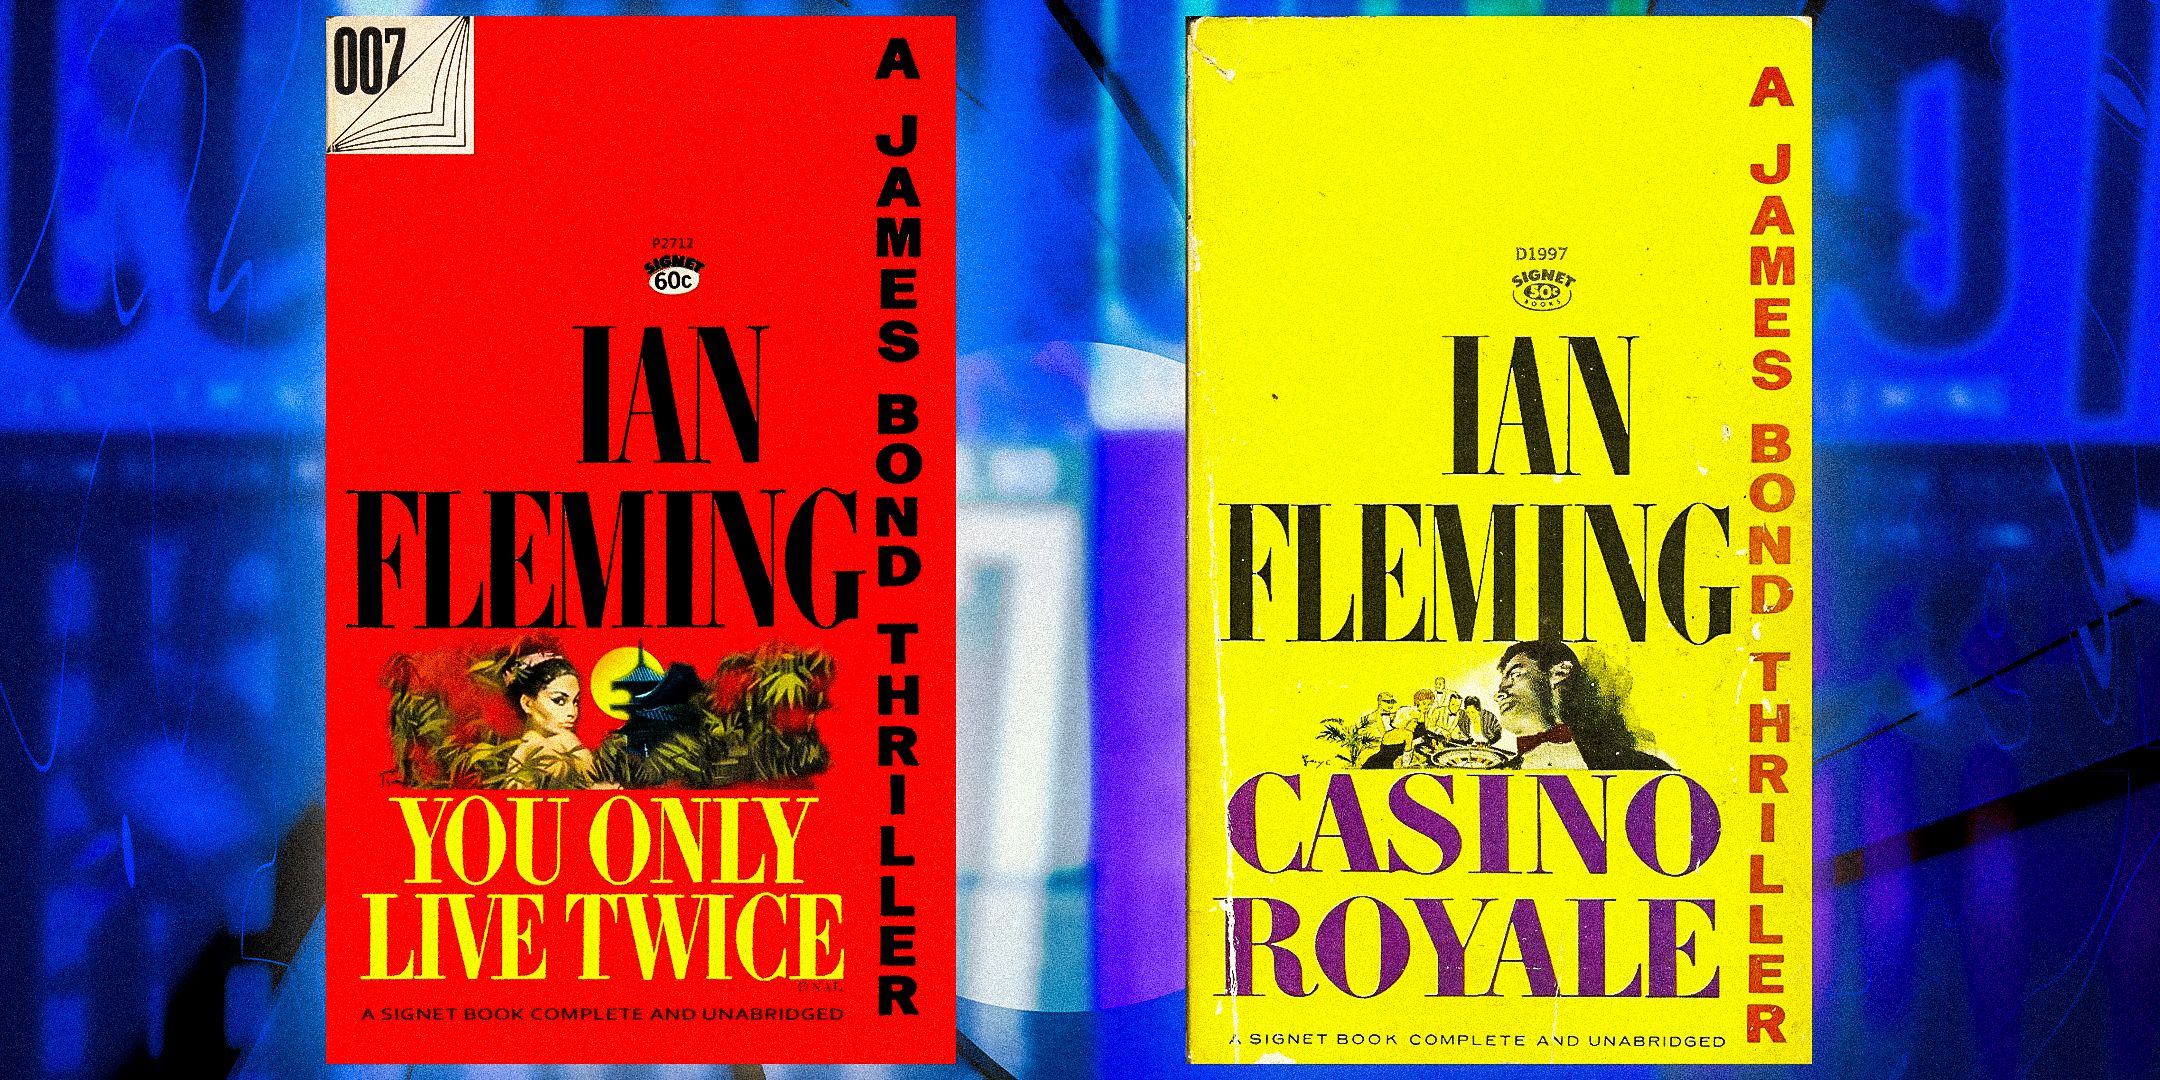 Custom image of James Bond book covers